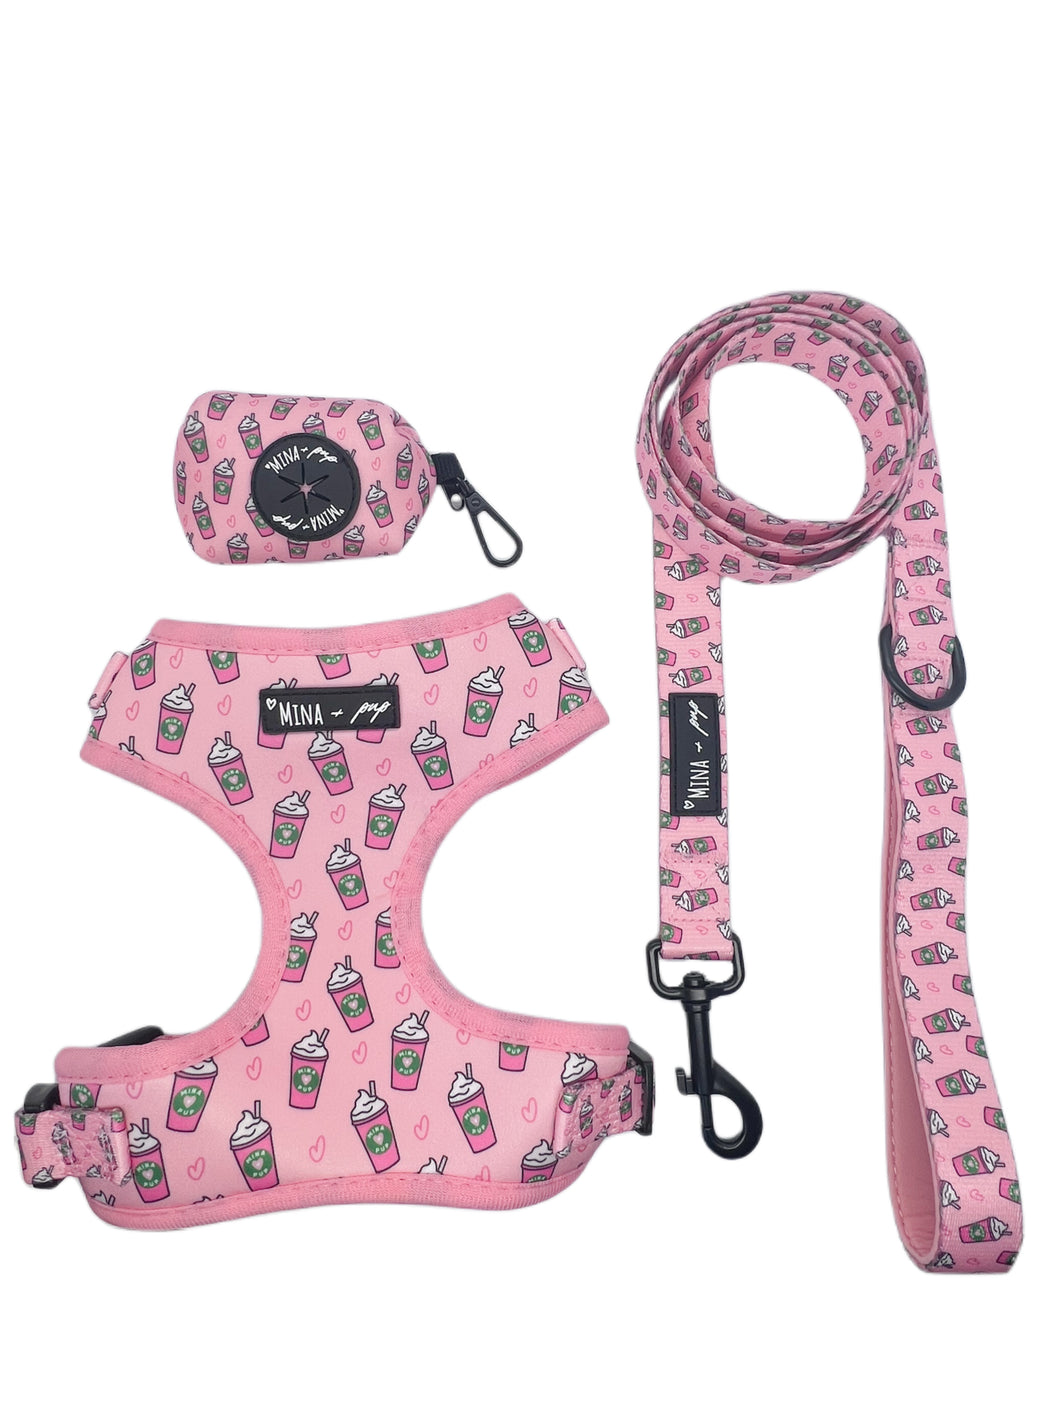 BUNDLE: Pupshake Pink Adjustable Harness, Leash and Poop Bag Bundle SAVE $